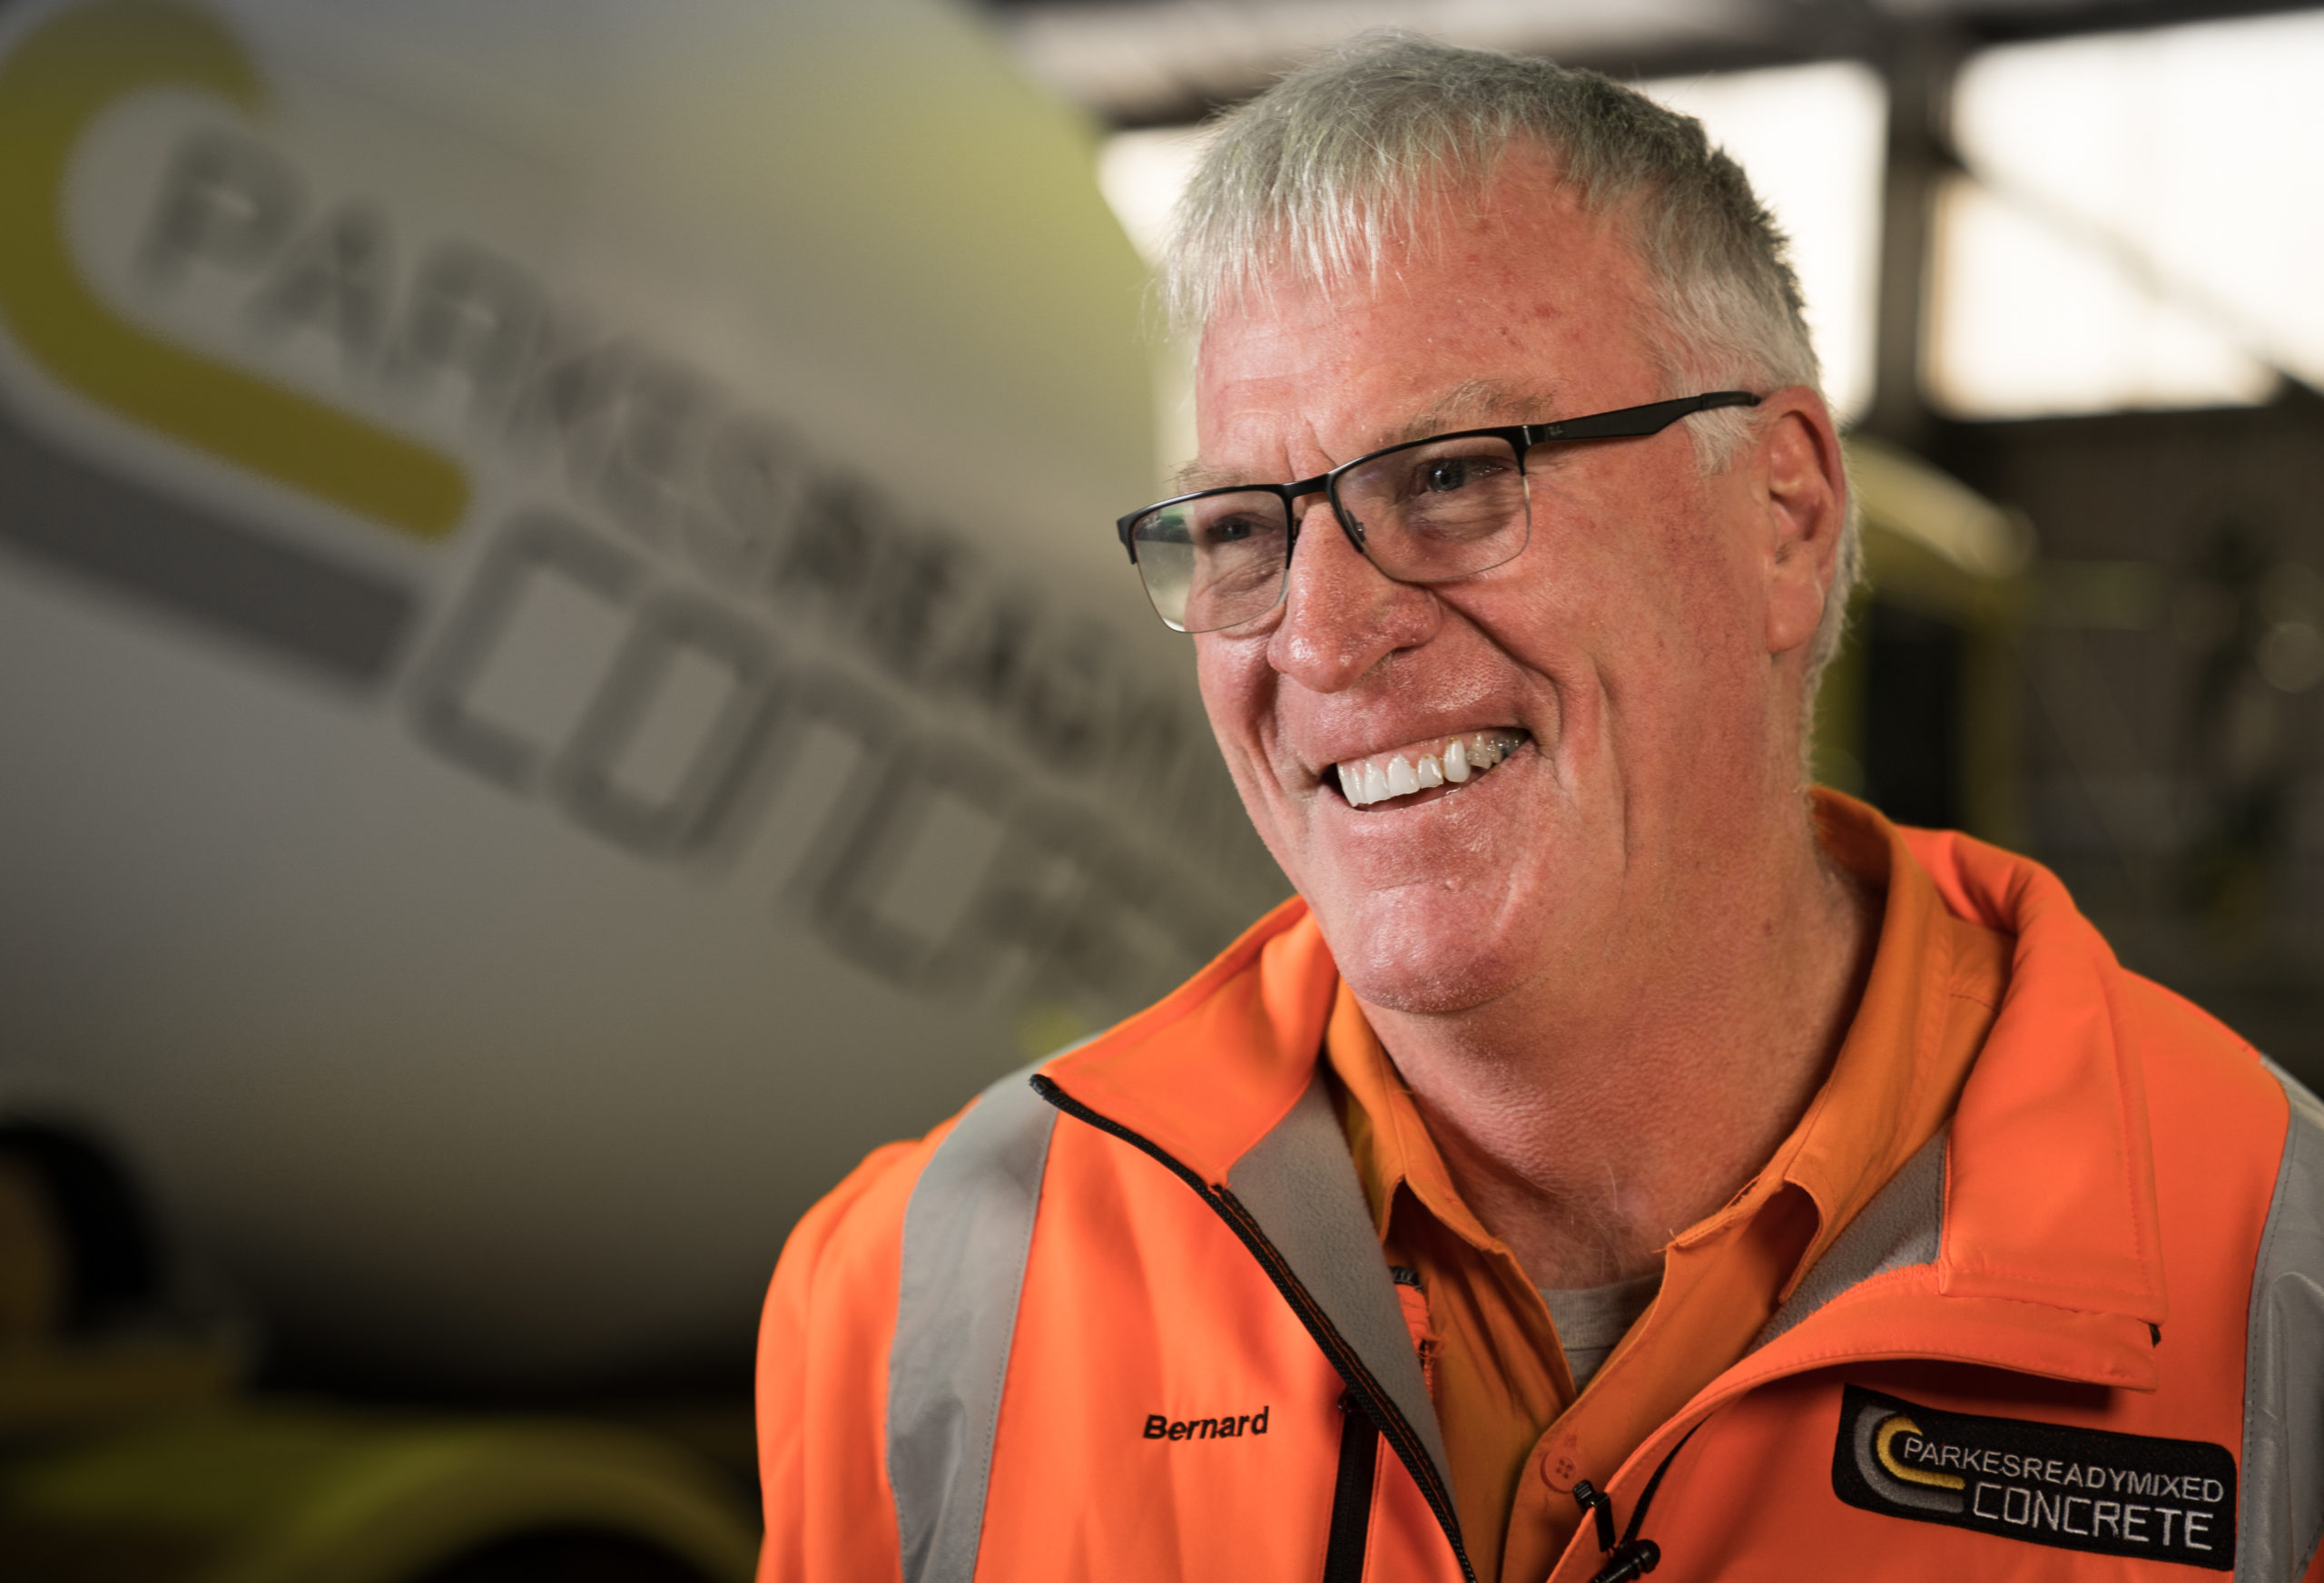 Bernard McCabe, Owner & Operator, Parkes Ready Mixed Concrete